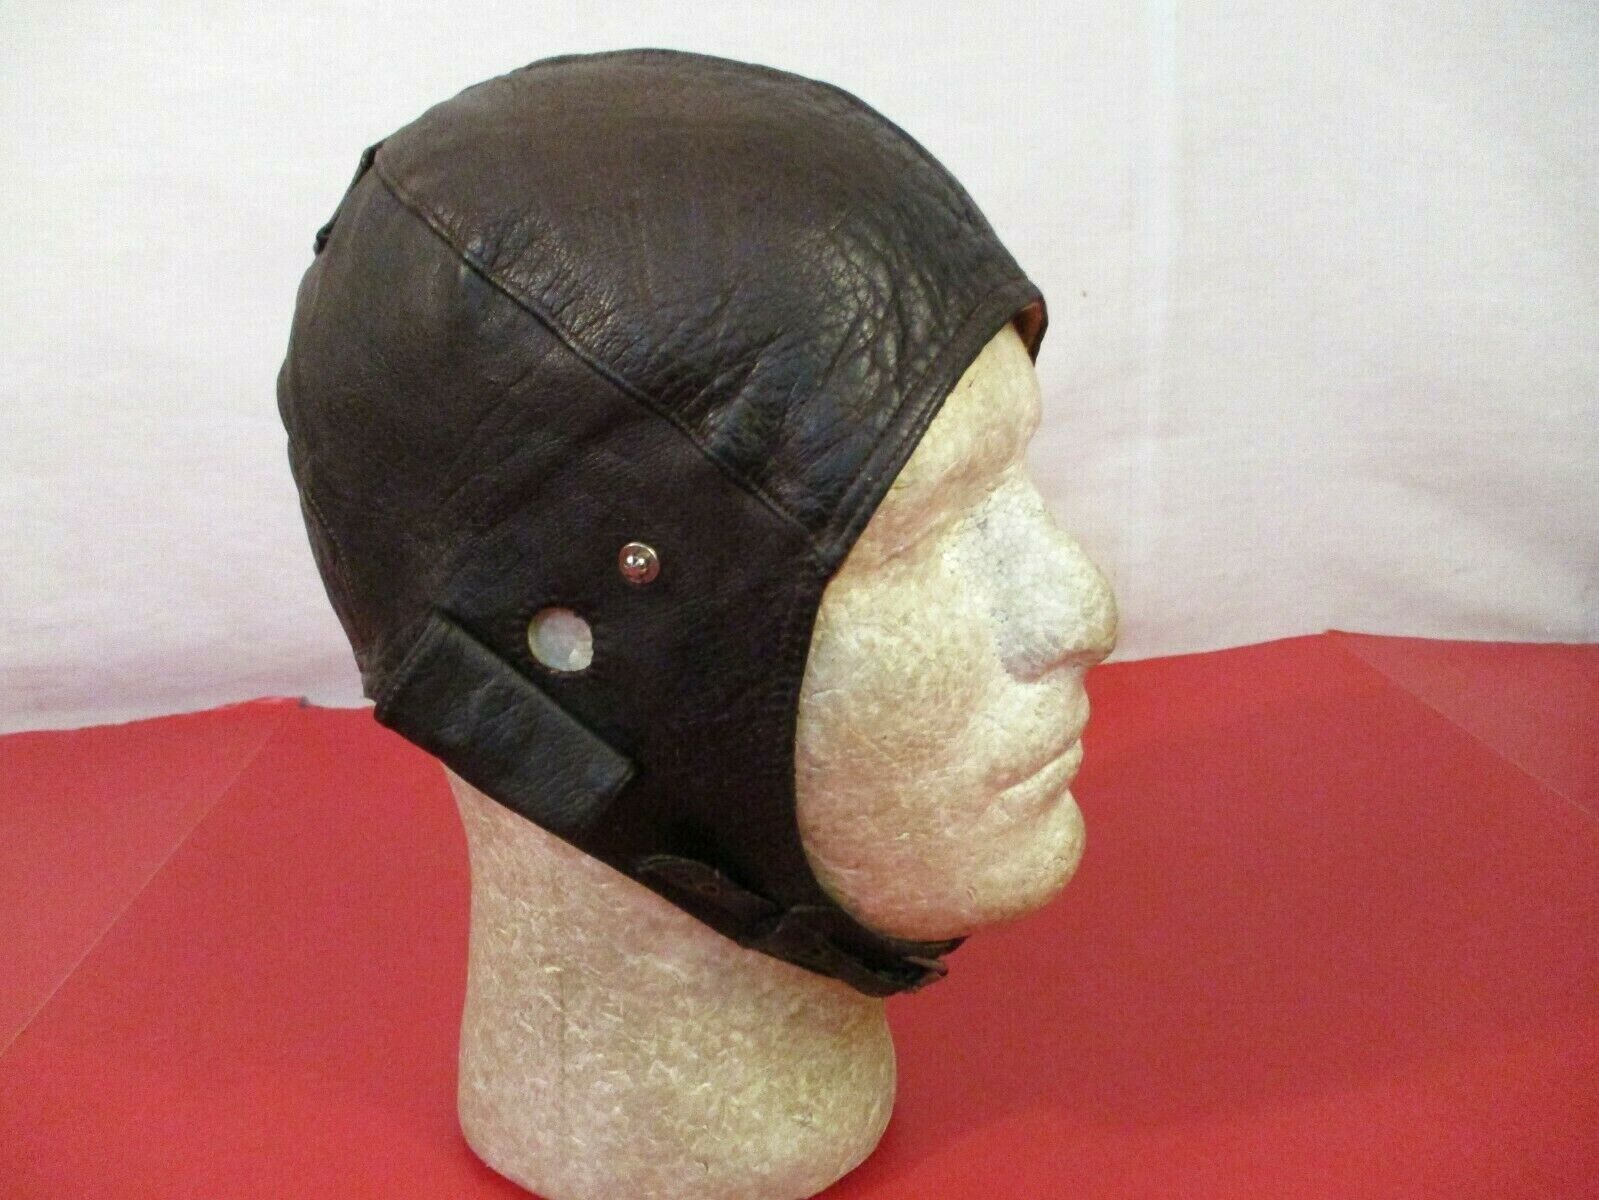 WWII Era German Luftwaffe Pilot's Leather Flight Helmet - Very NICE Condition #2